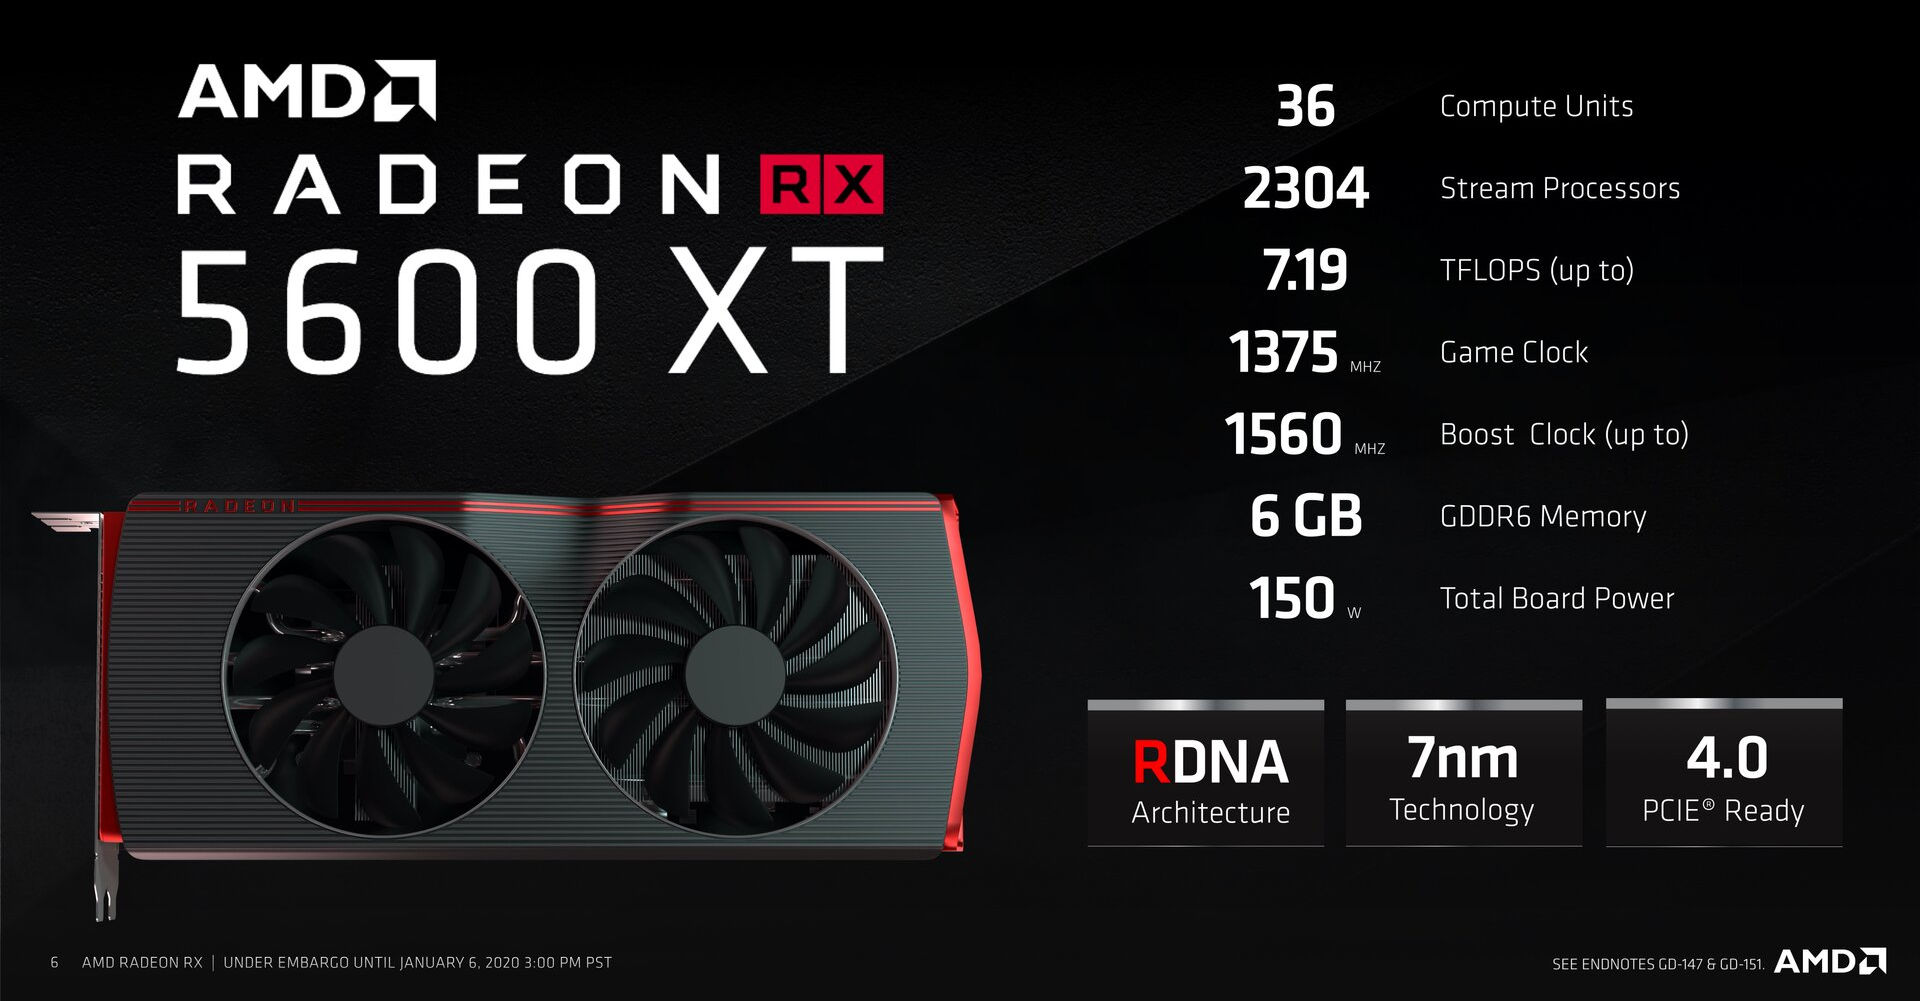 AMD introduces Radeon RX 5600 XT for 279 USD - VideoCardz.com